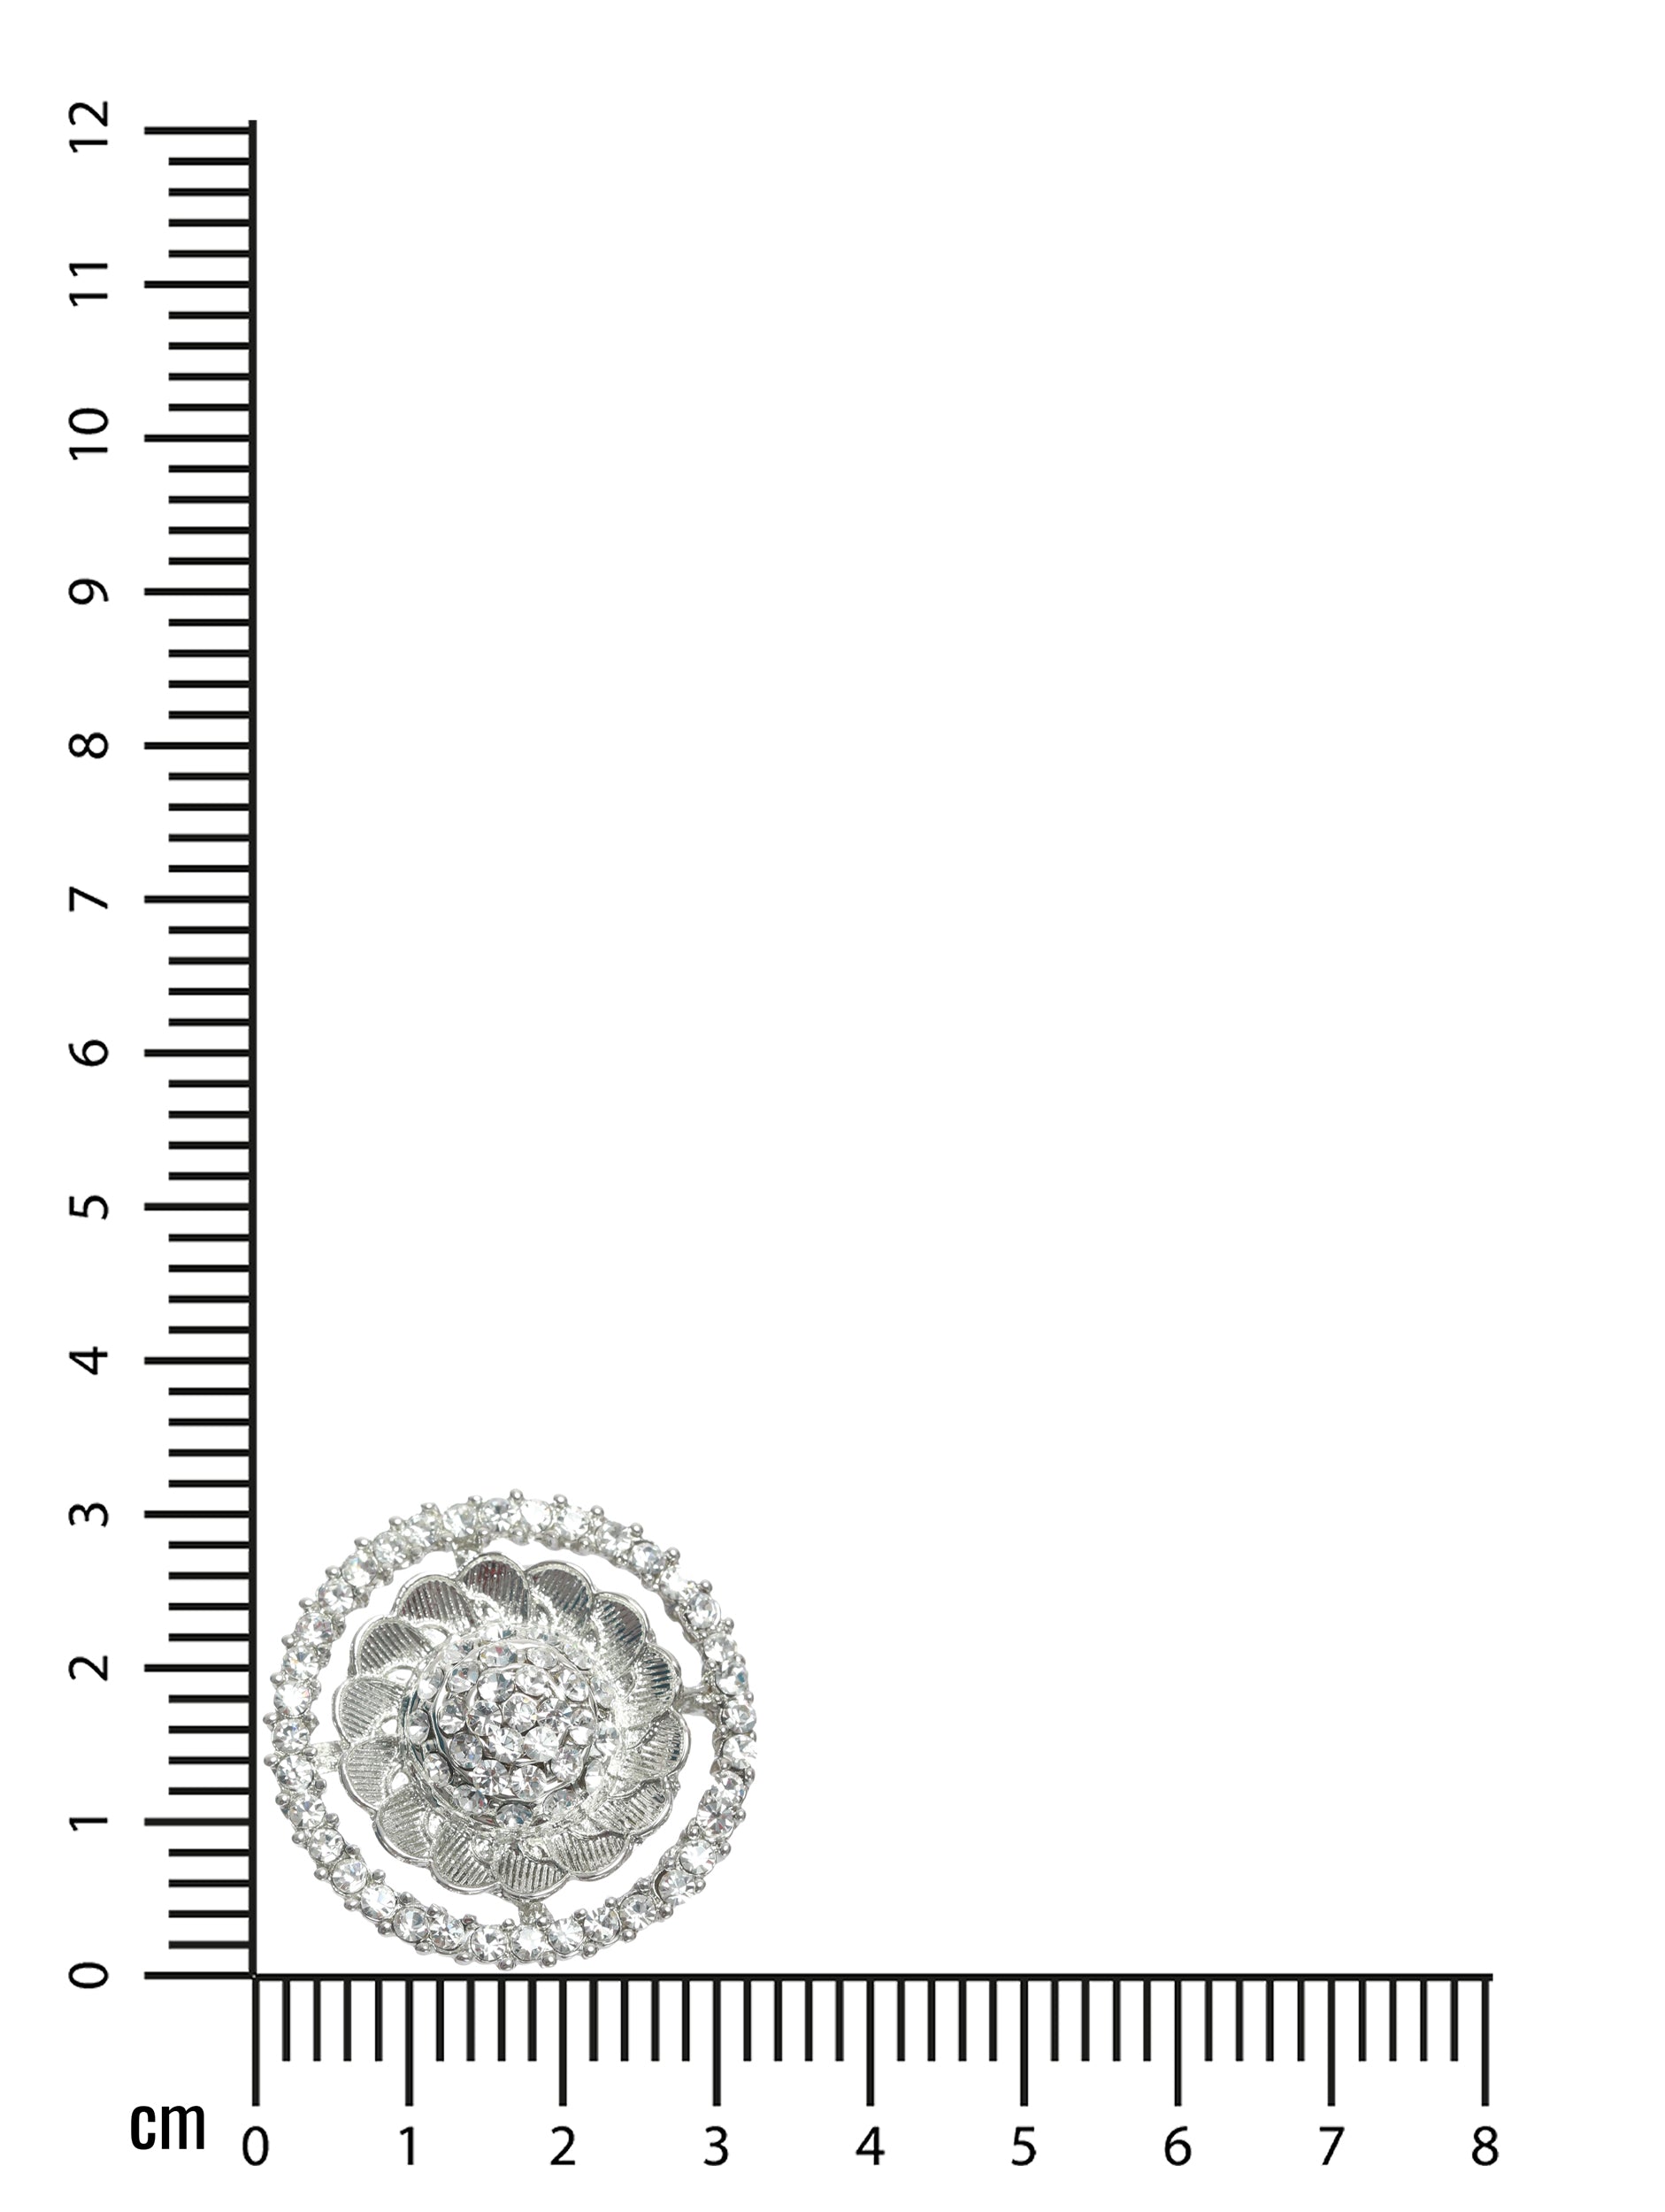 Silver-Plated CZ Studded Flower shaped Adjustable Finger Ring - Jazzandsizzle